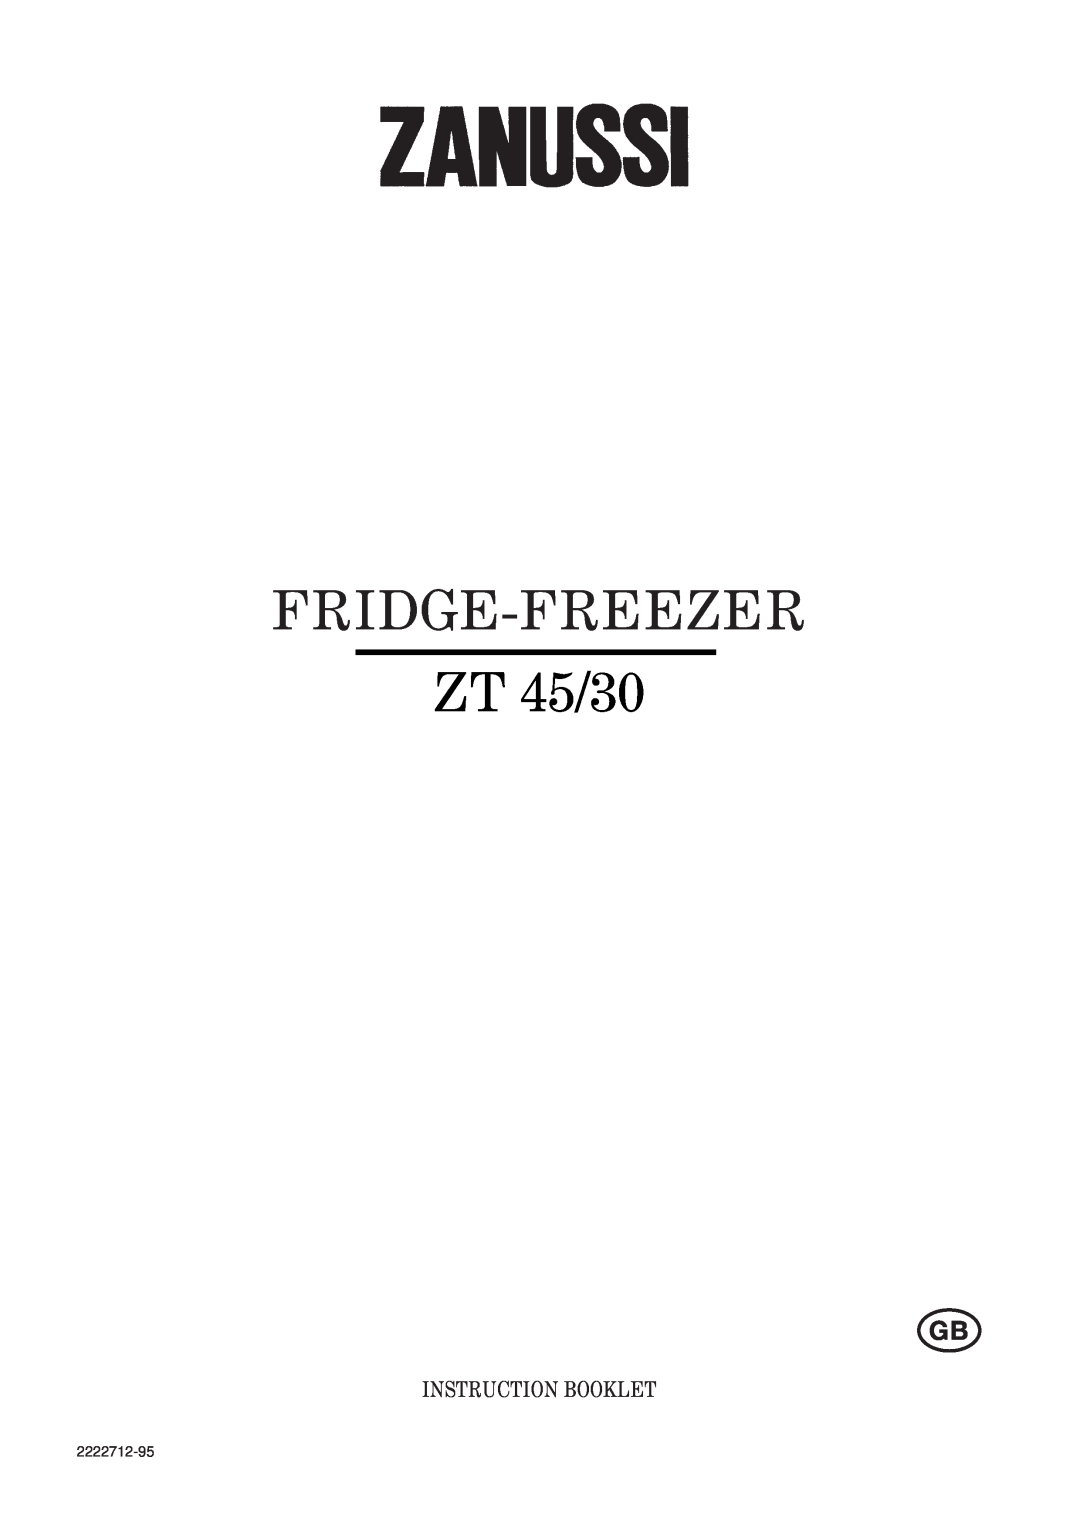 Zanussi manual FRIDGE-FREEZER ZT 45/30, Instruction Booklet, 2222712-95 